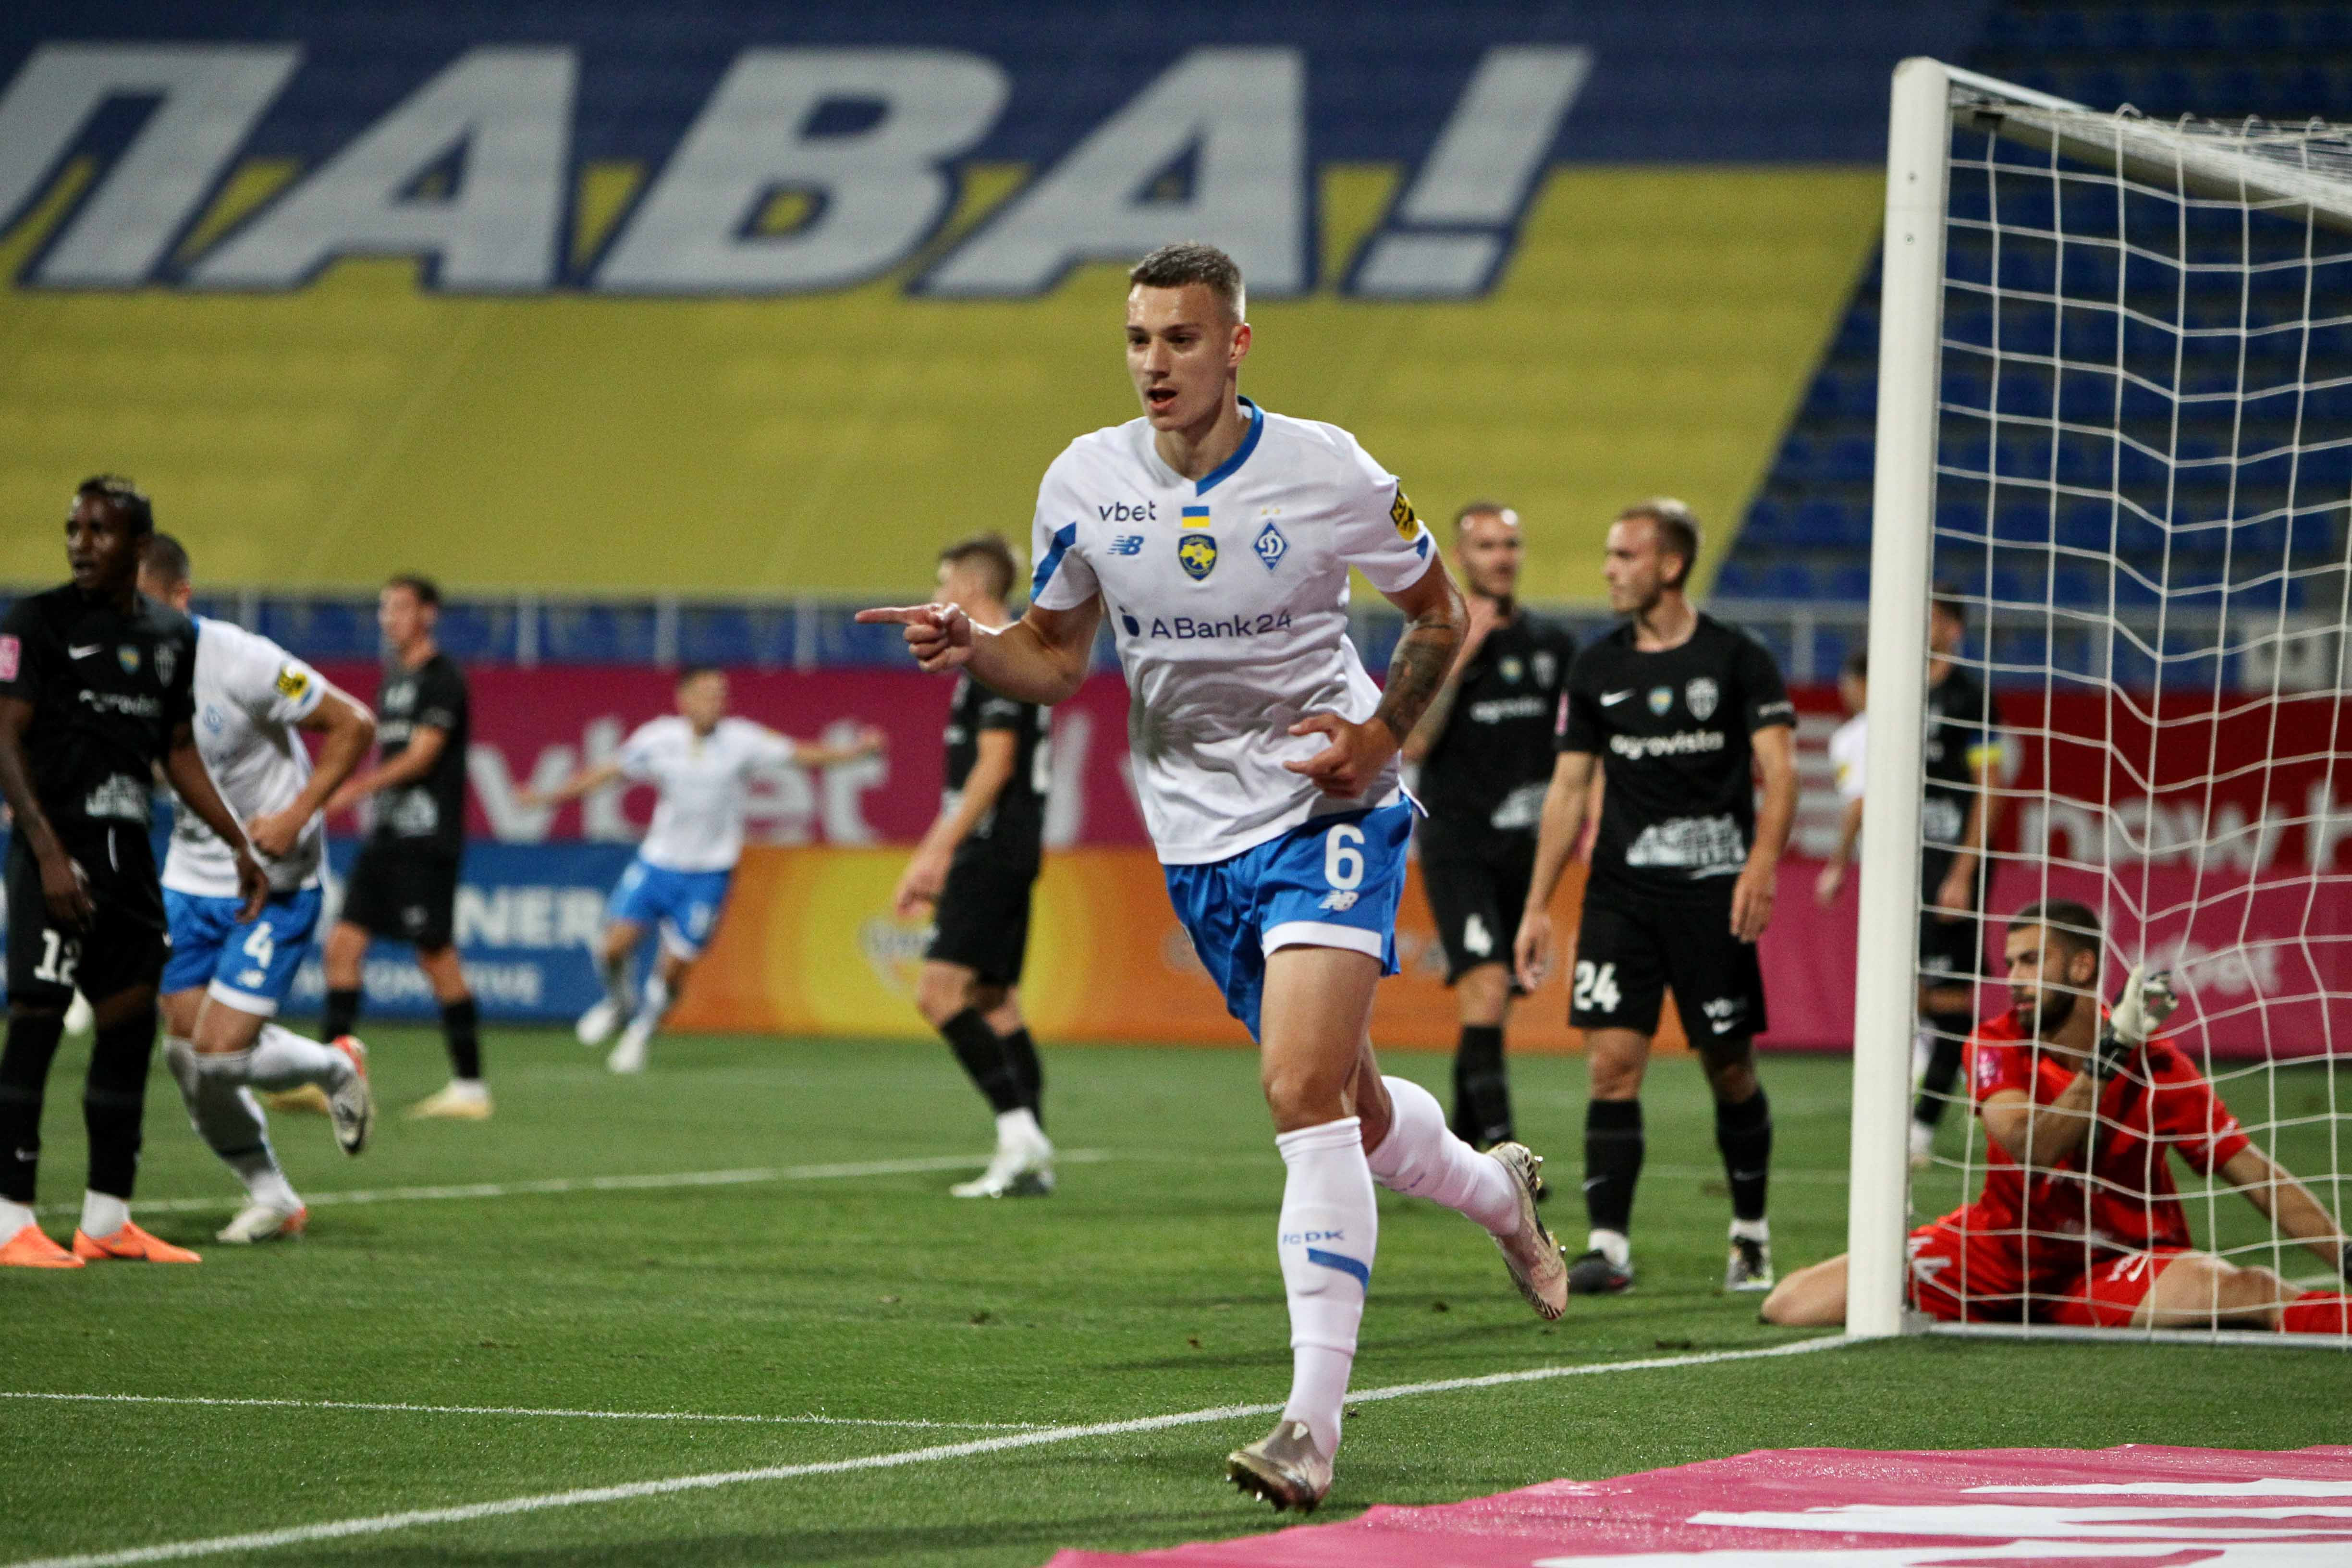 Volodymyr Brazhko: “I went to the far post twice and scored twice”